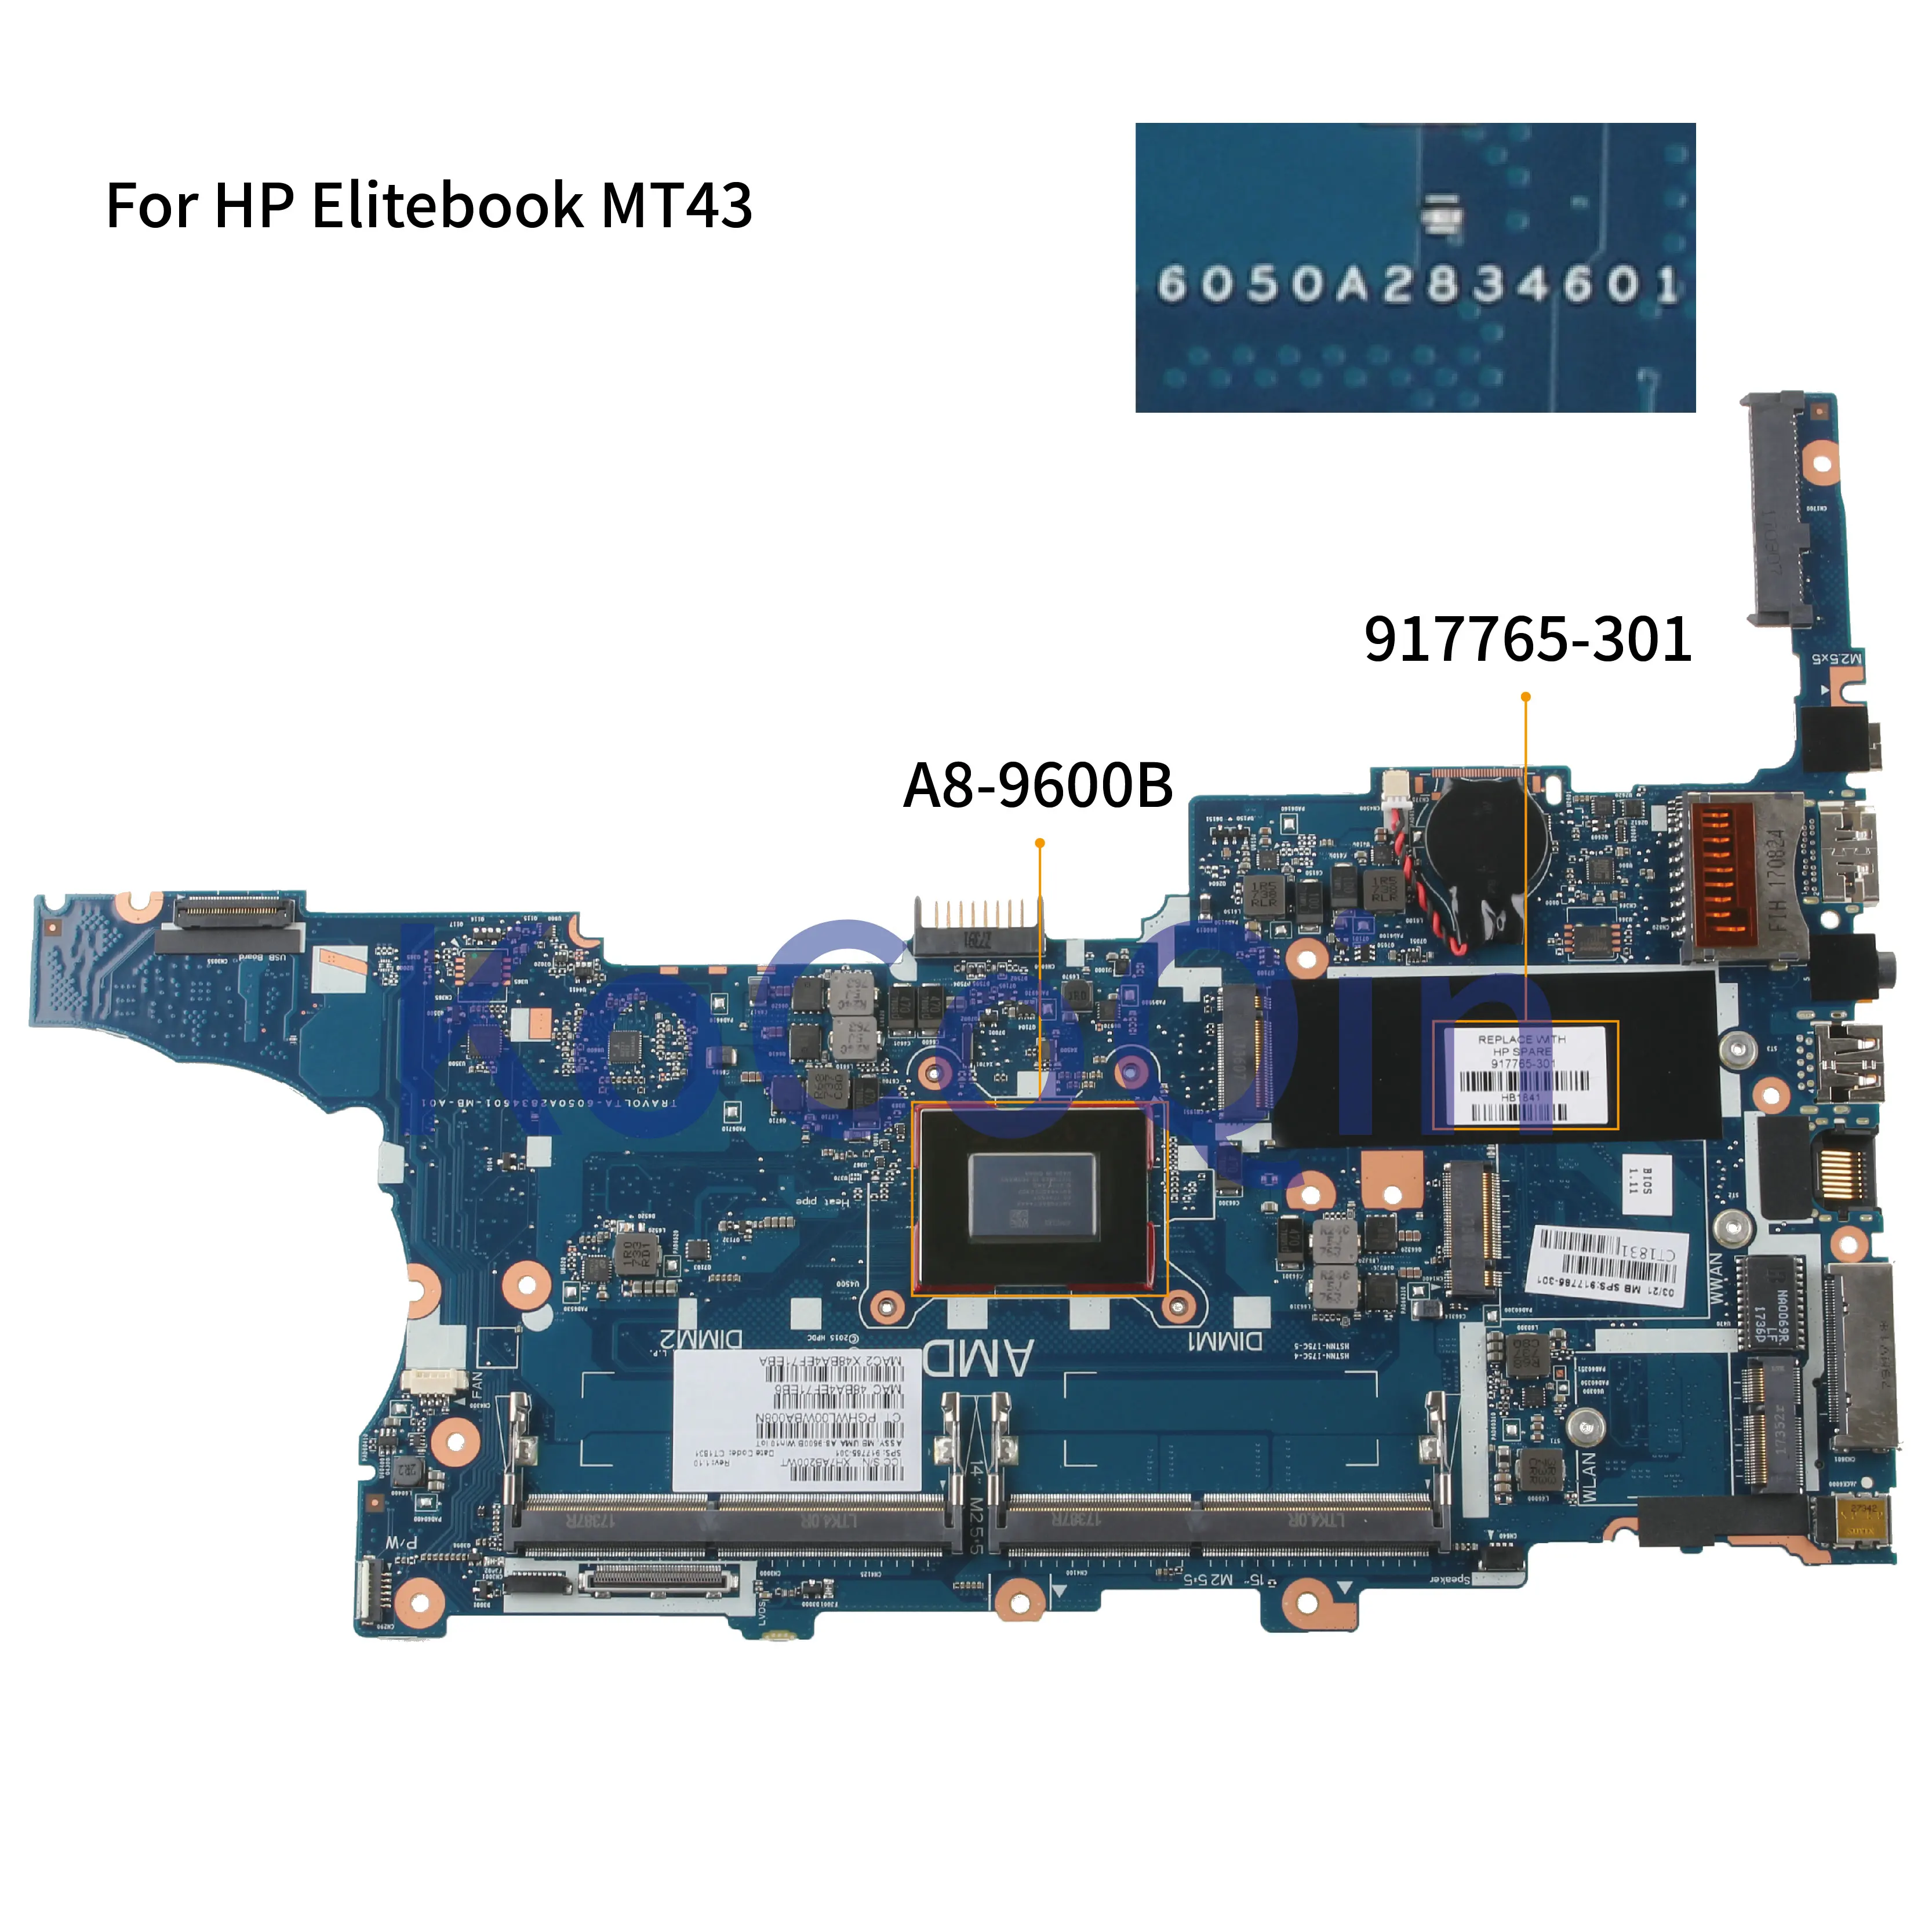 90% OFF  KoCoQin Laptop motherboard For HP Elitebook 745 G4 MT43 Mainboard 917765-001 917765-601 6050A283460